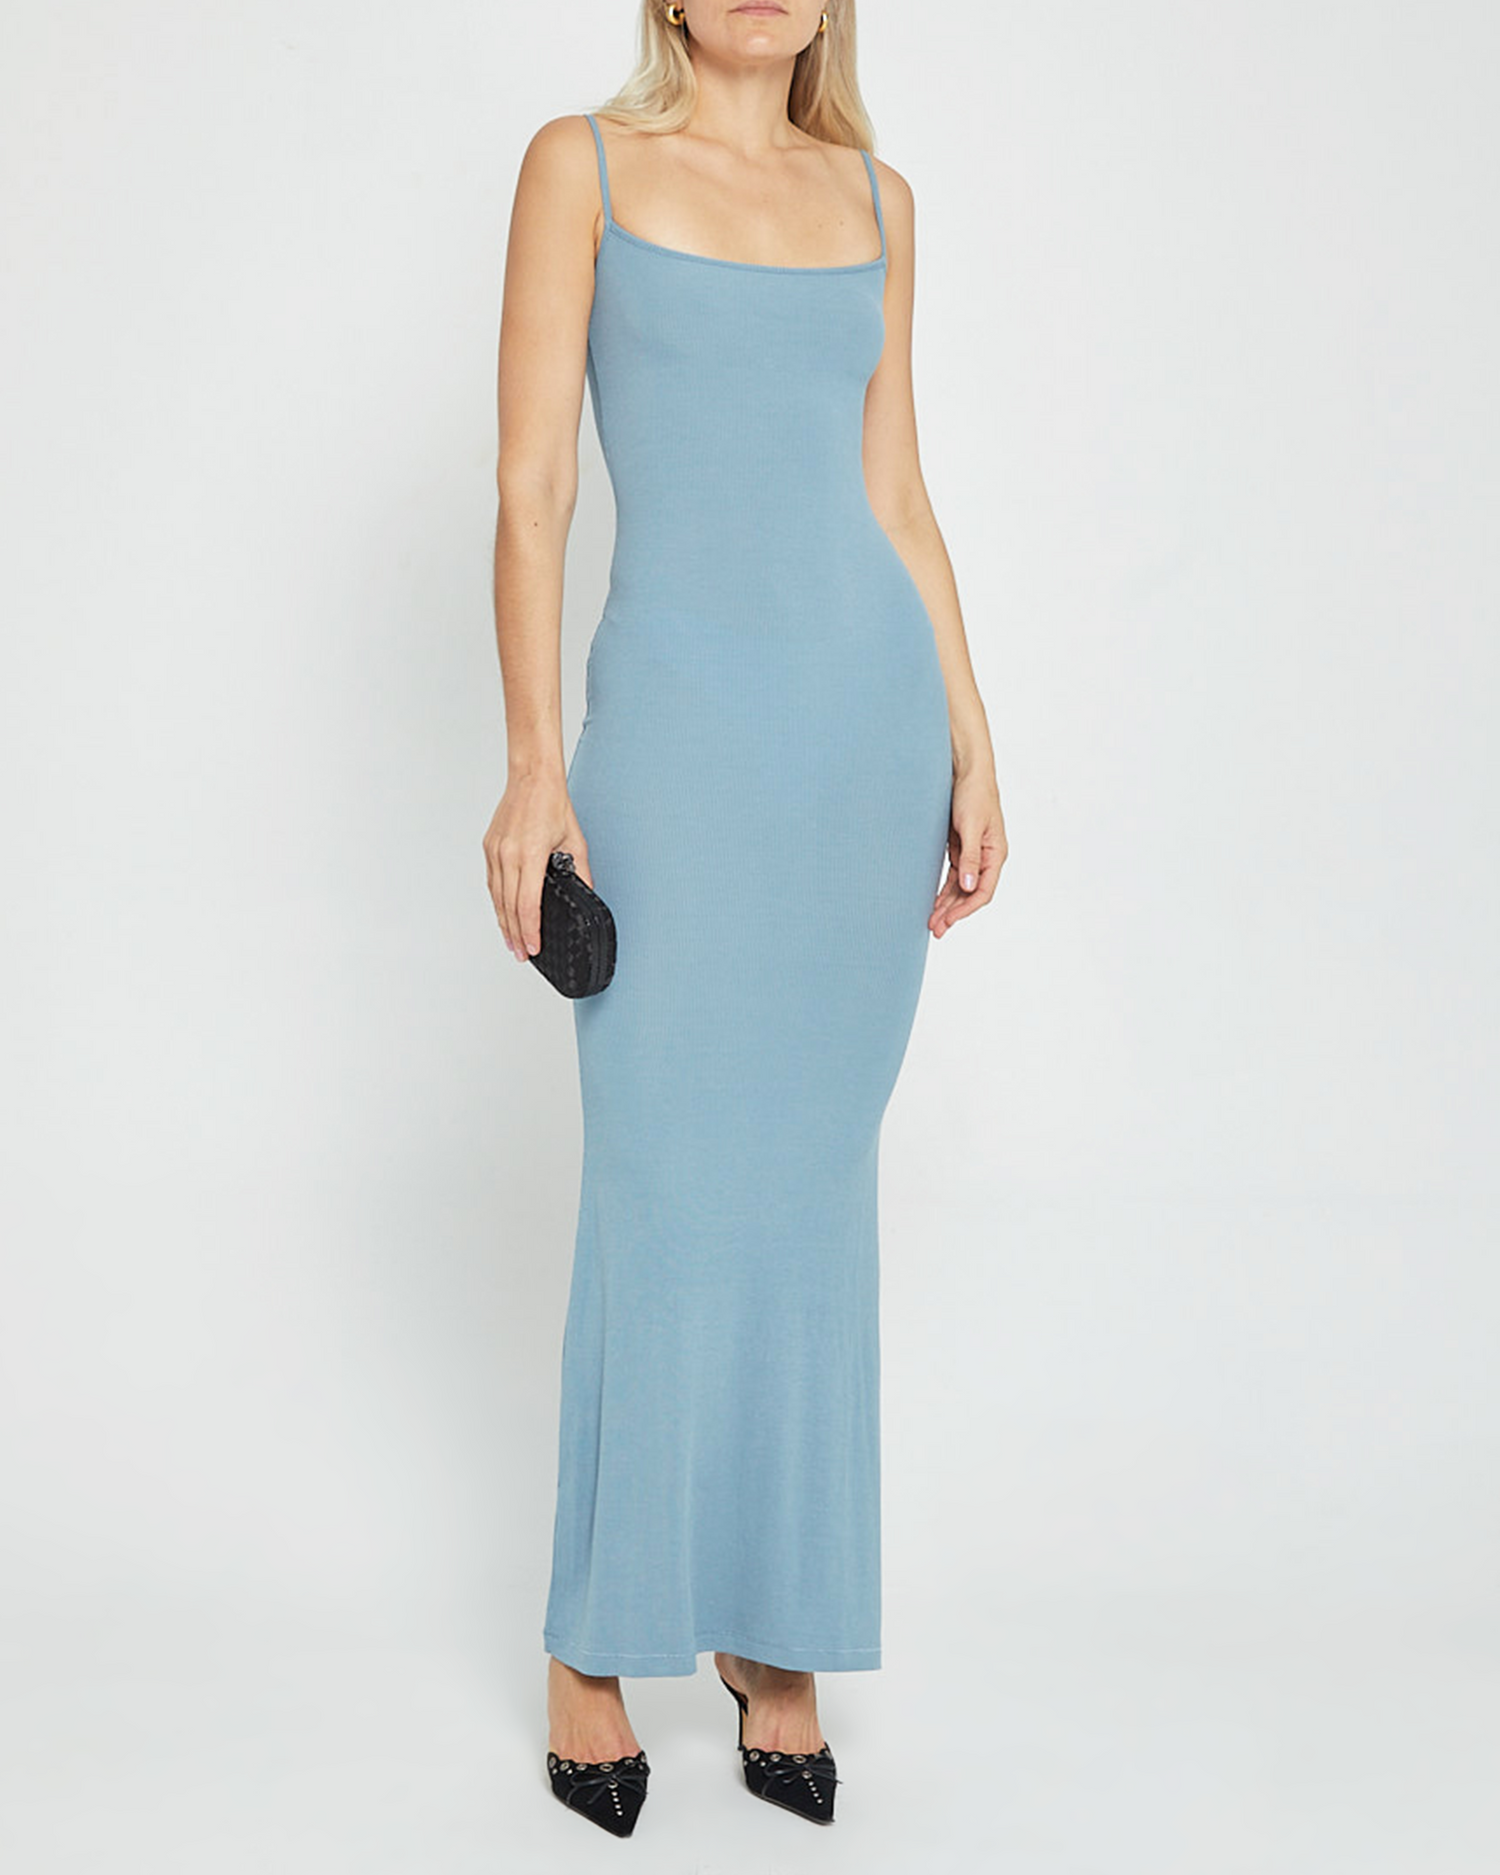 Blue Soft Lounge Long Sleeve Maxi Dress by SKIMS on Sale